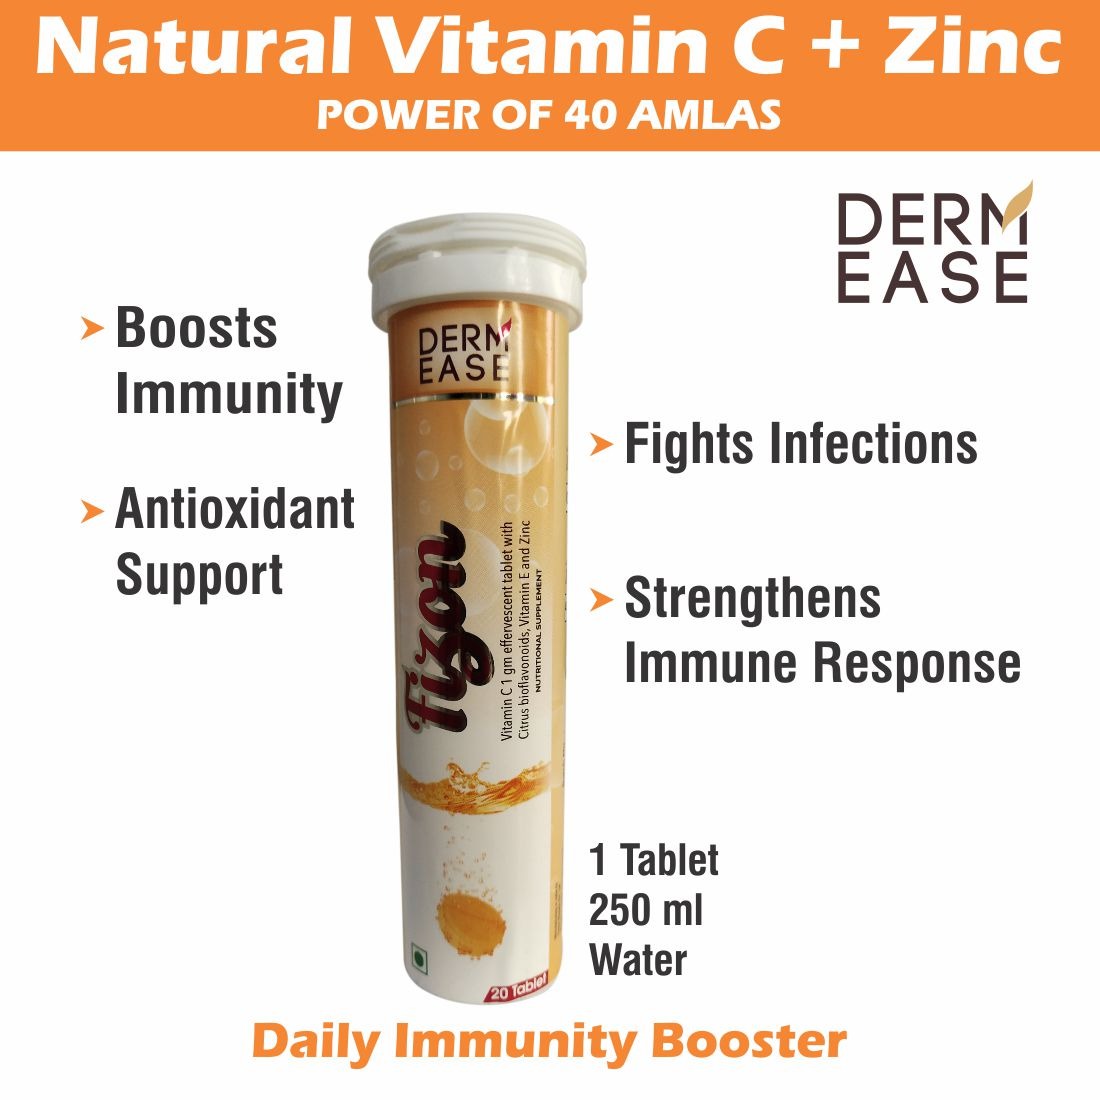 DERM EASE Fizon Vitamin C Effervescent Tablets